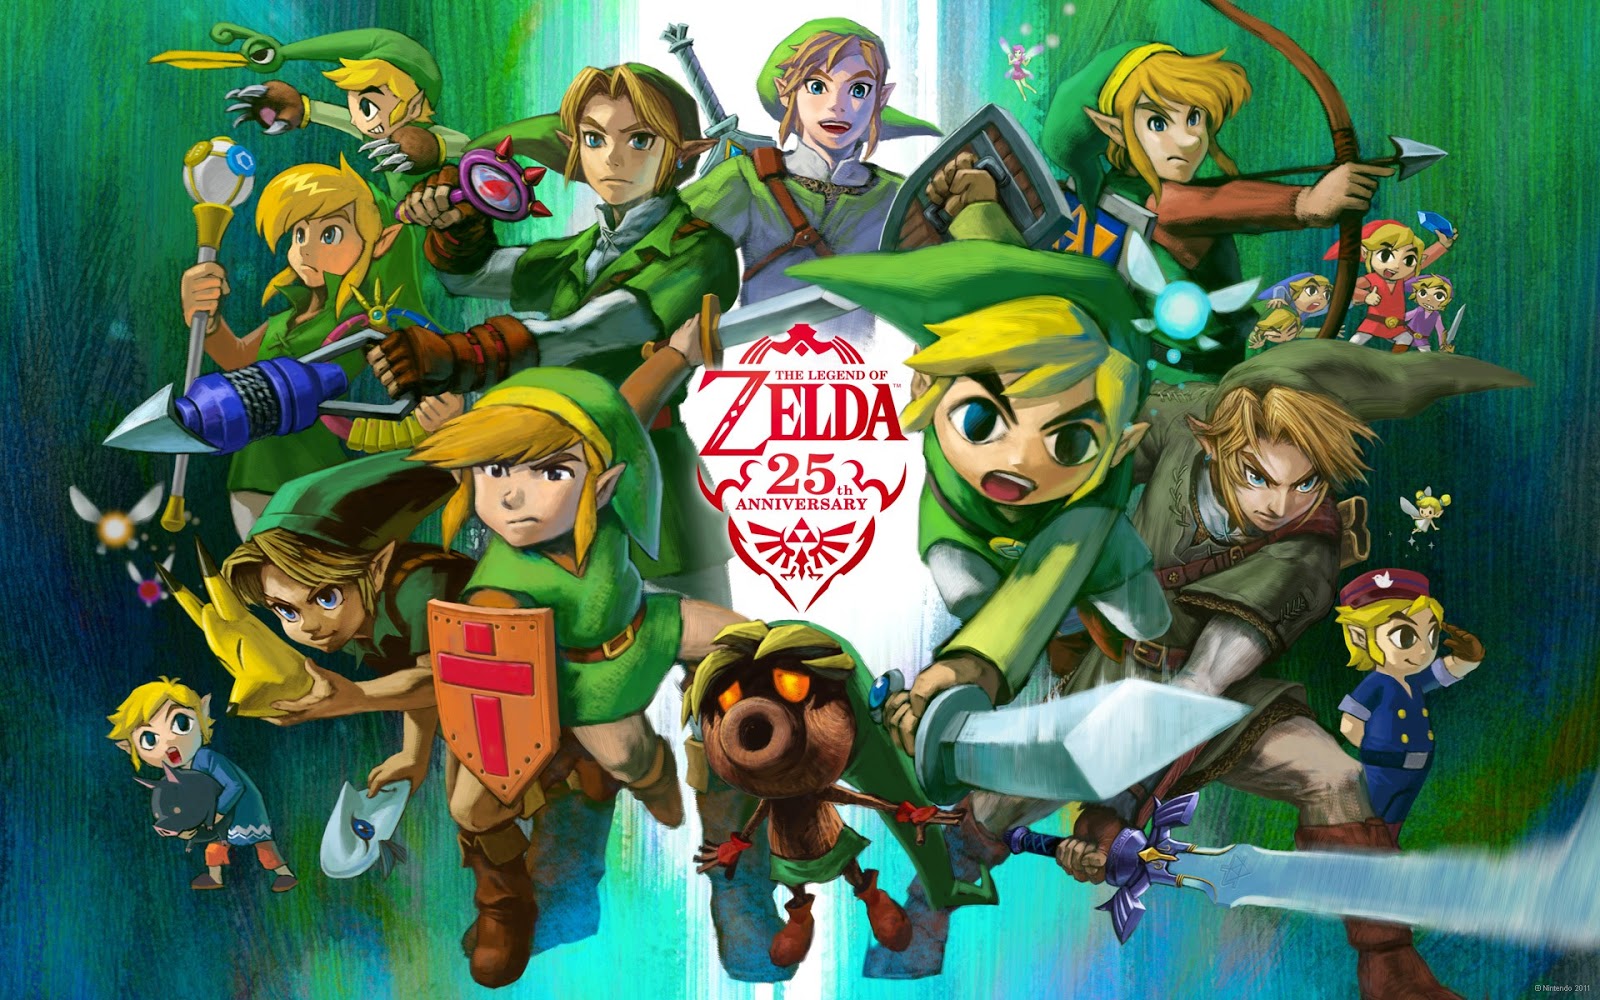 The Earth of Zelda: Wallpapers